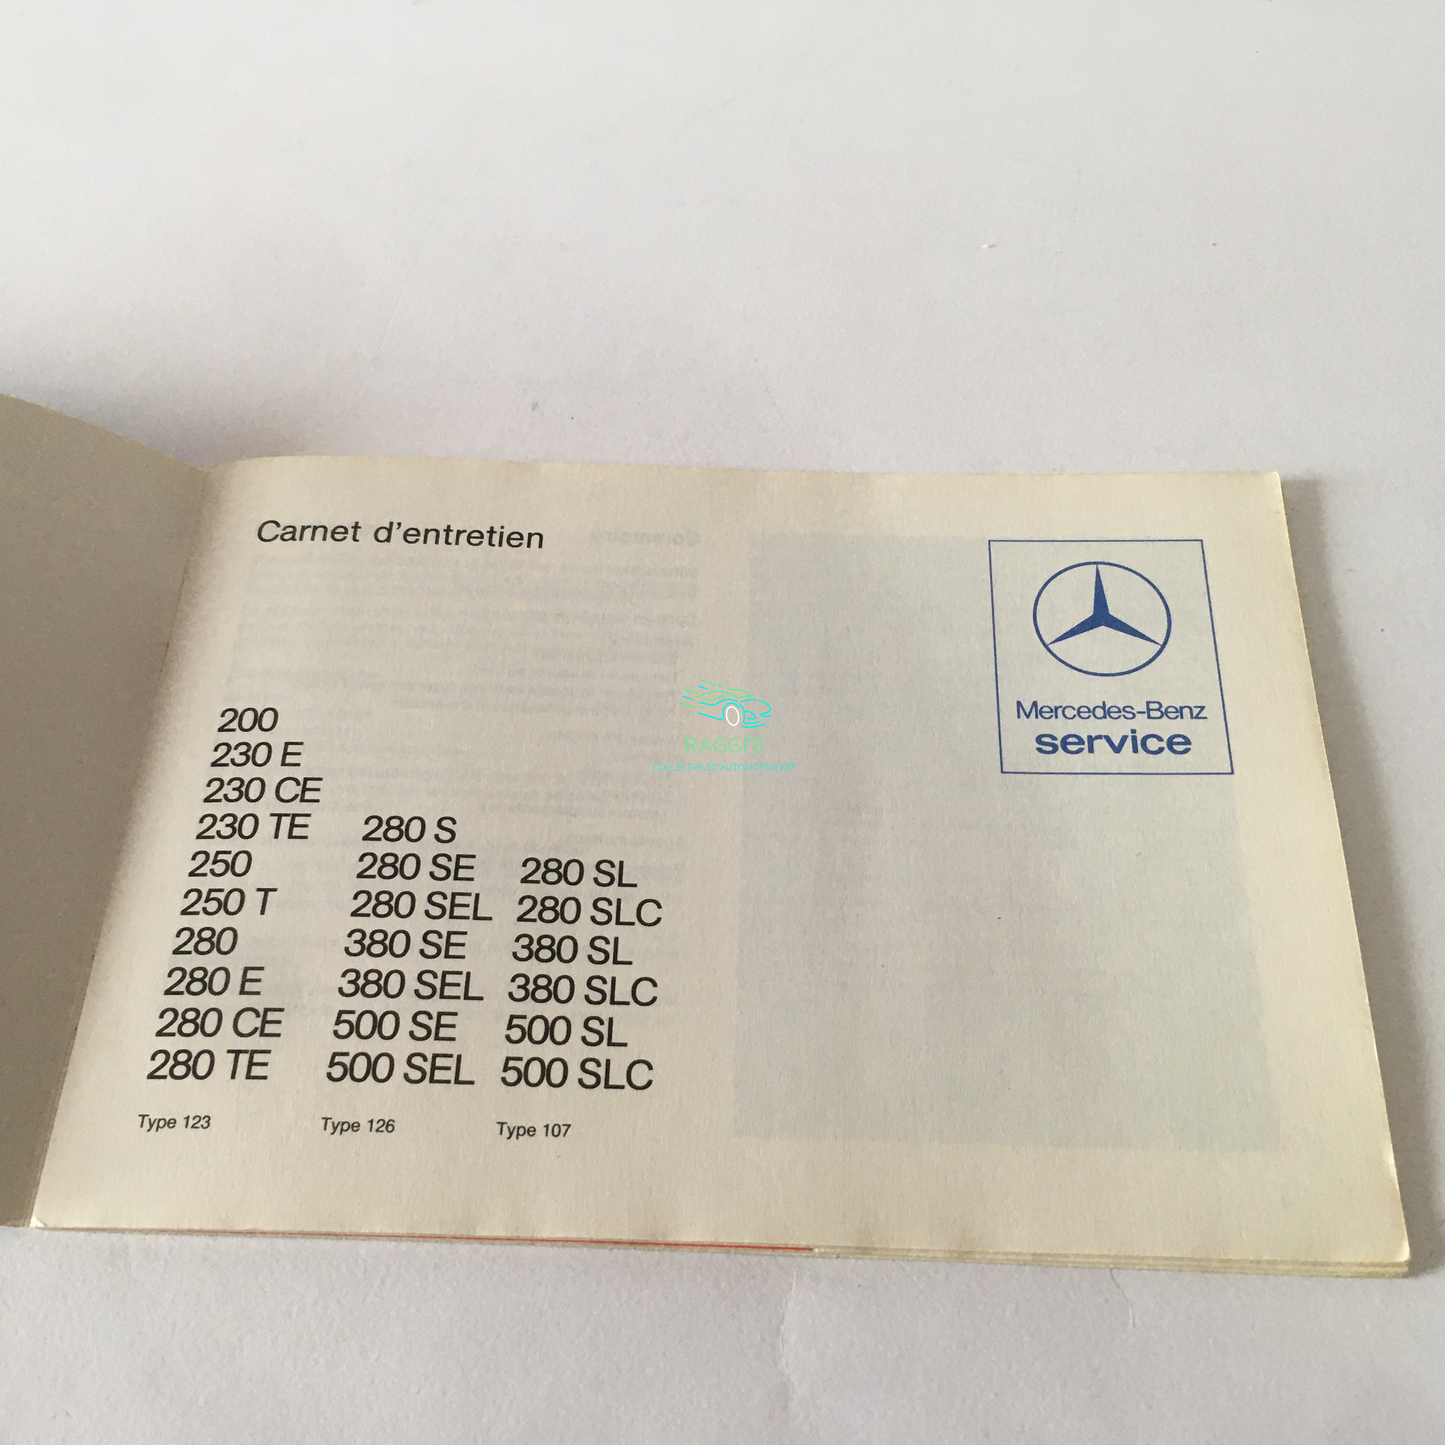 Mercedes-Benz, Libretto Manutenzione Mercedes-Benz Type 123 - Type 126 - Type 107, Brochure Mercedes-Benz Class S Anno 1989 e Brochure Tutta Gamma Mercedes-Benz Anno 1985.